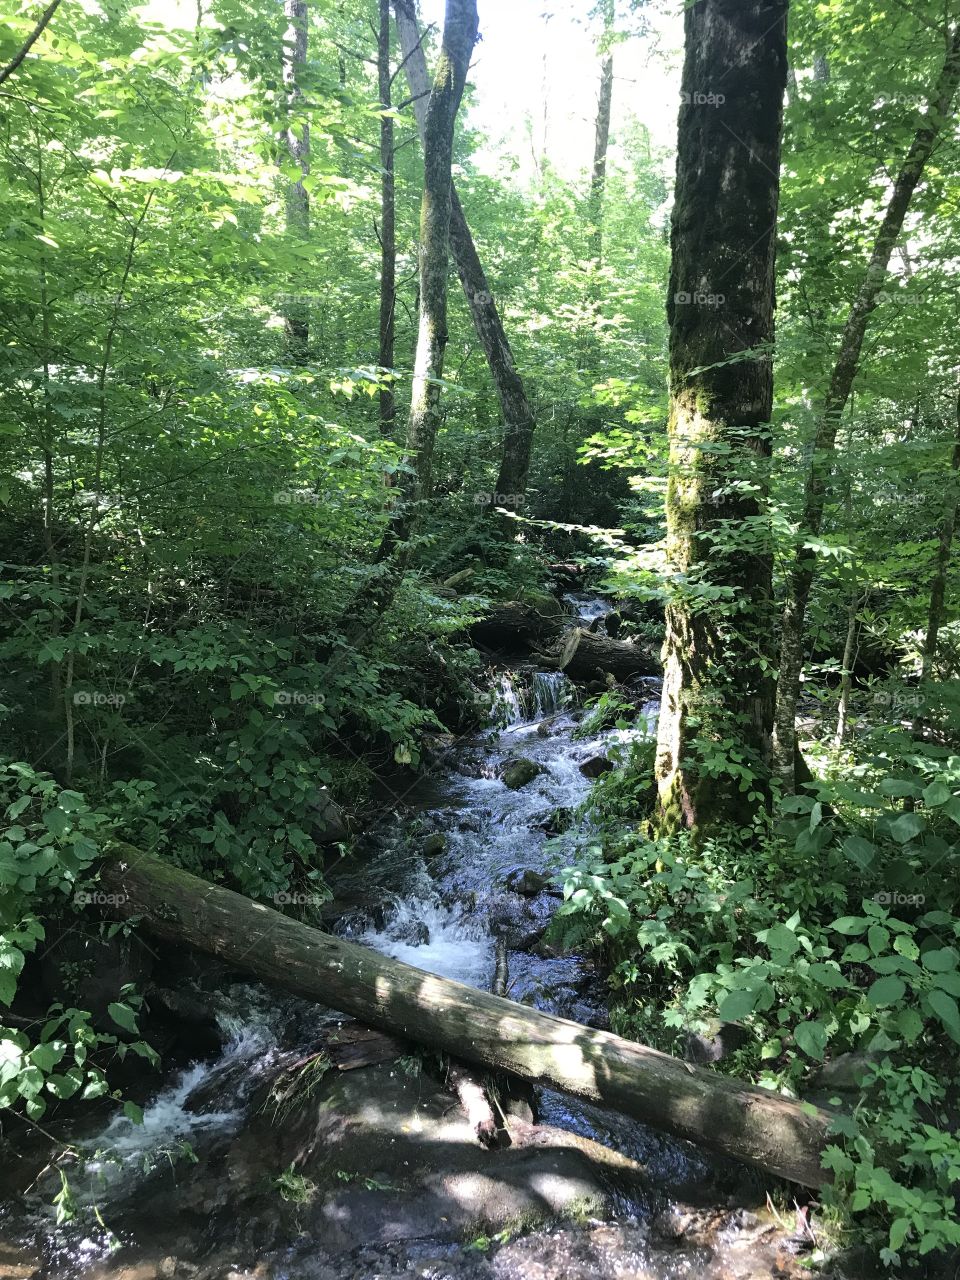 Roaring creek